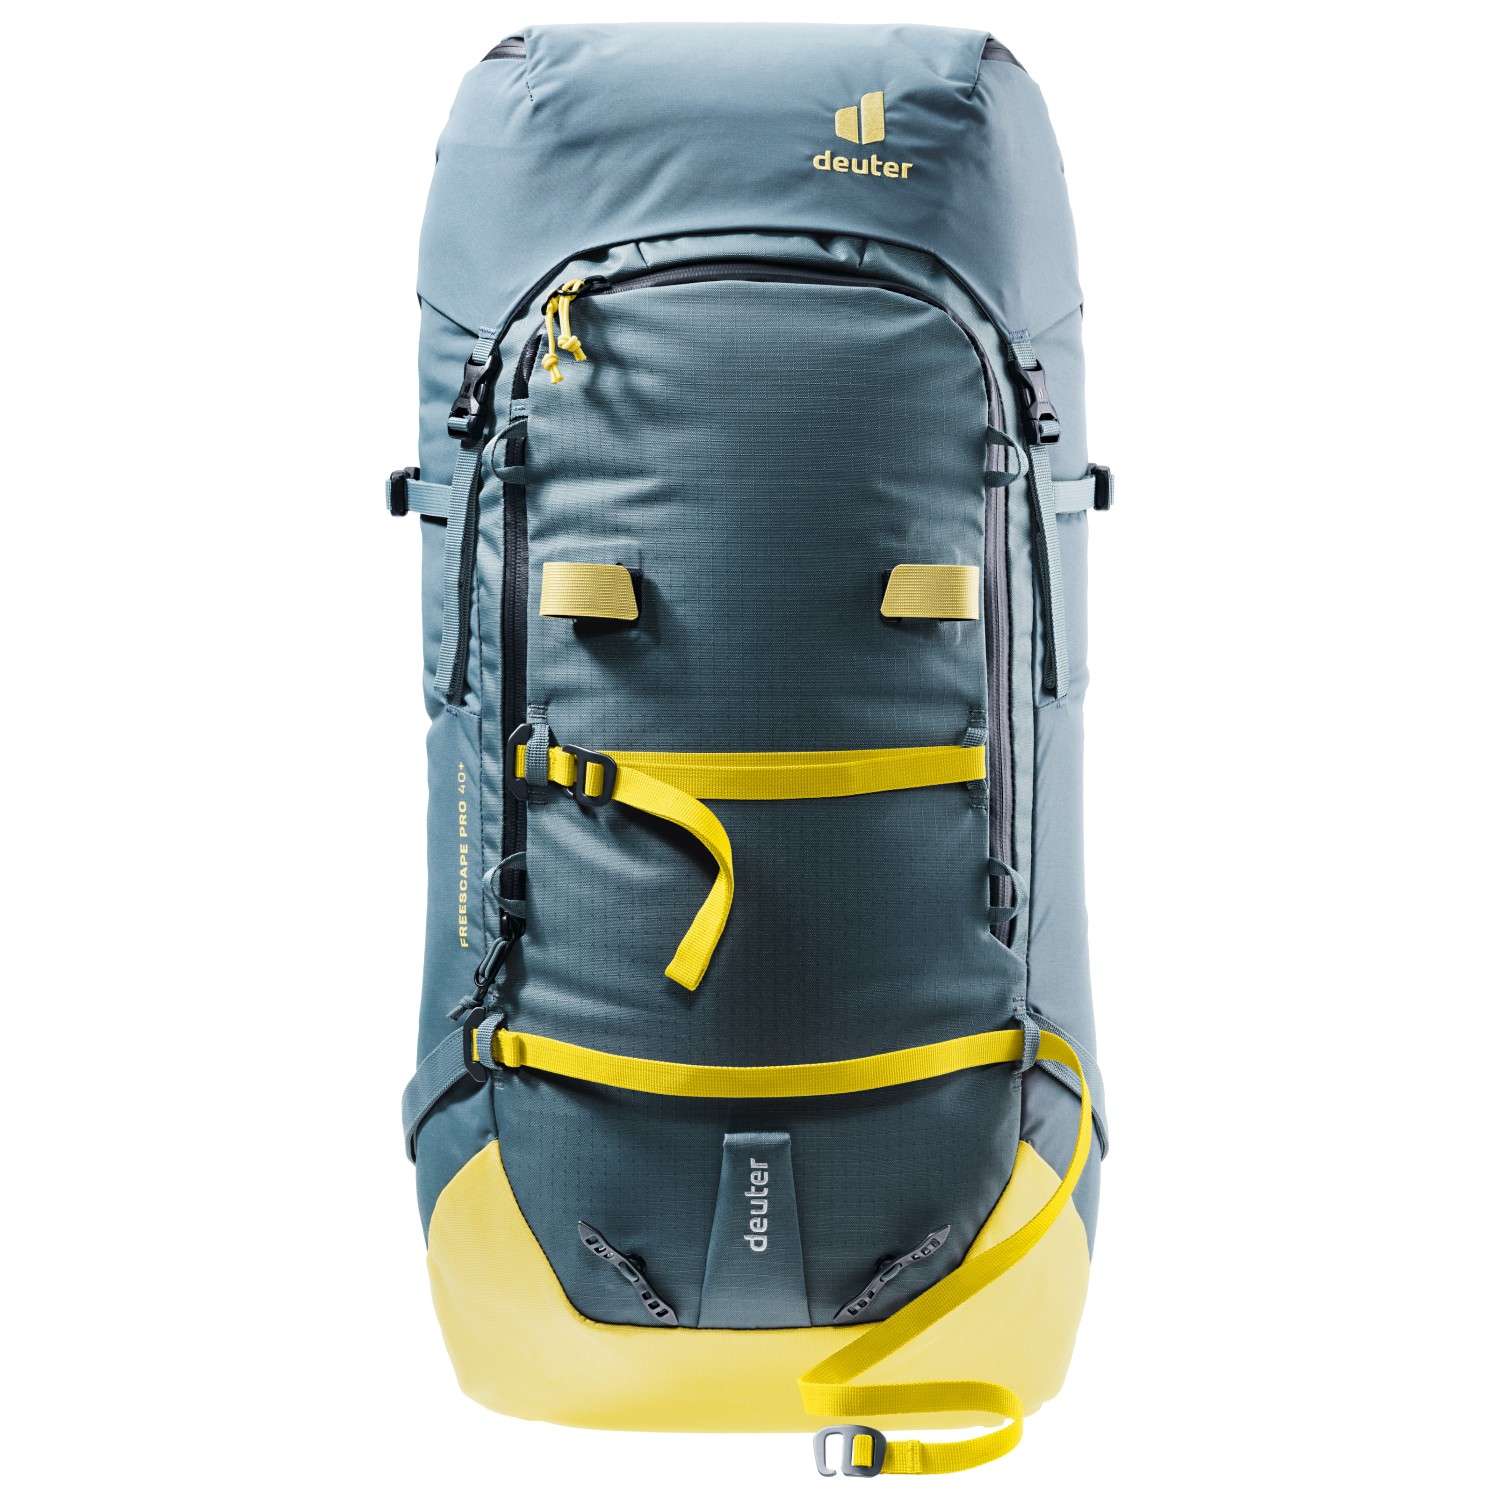 Deuter Freescape Pro 40 Ski Snowboard Touring Backpack